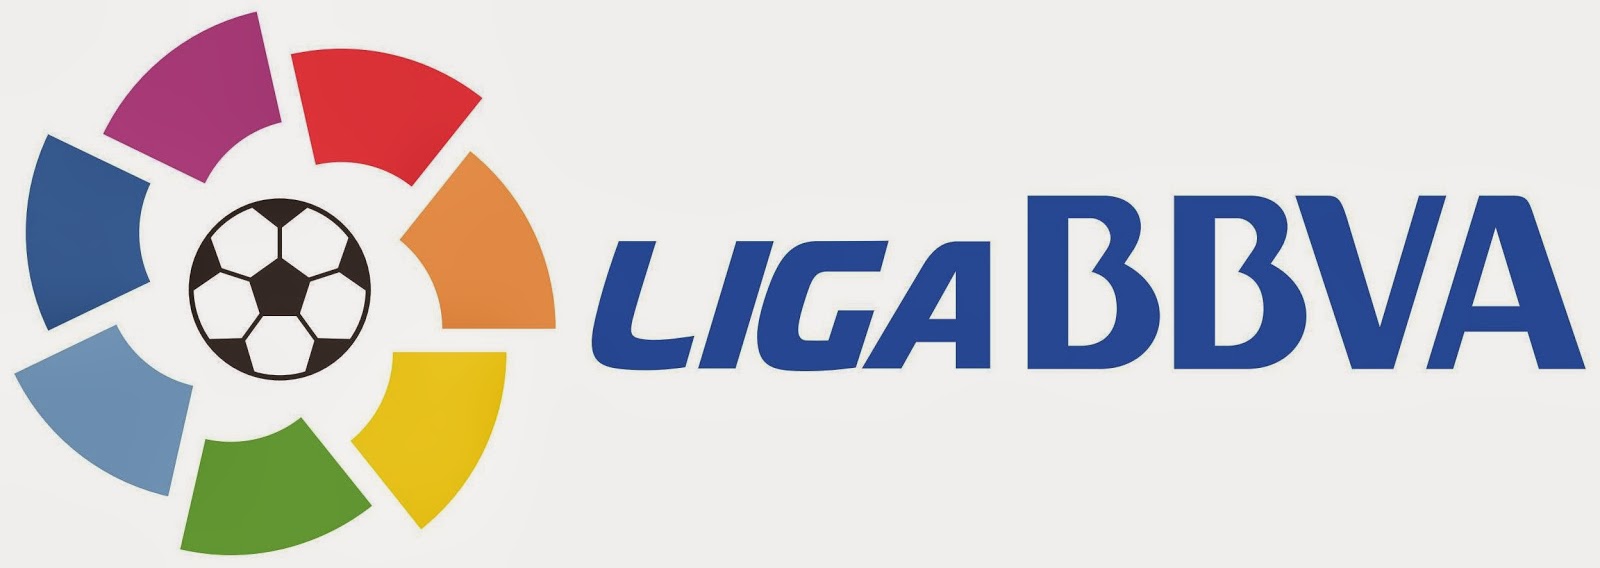 La Liga Logo Free Download eps - Logo Vector A to Z